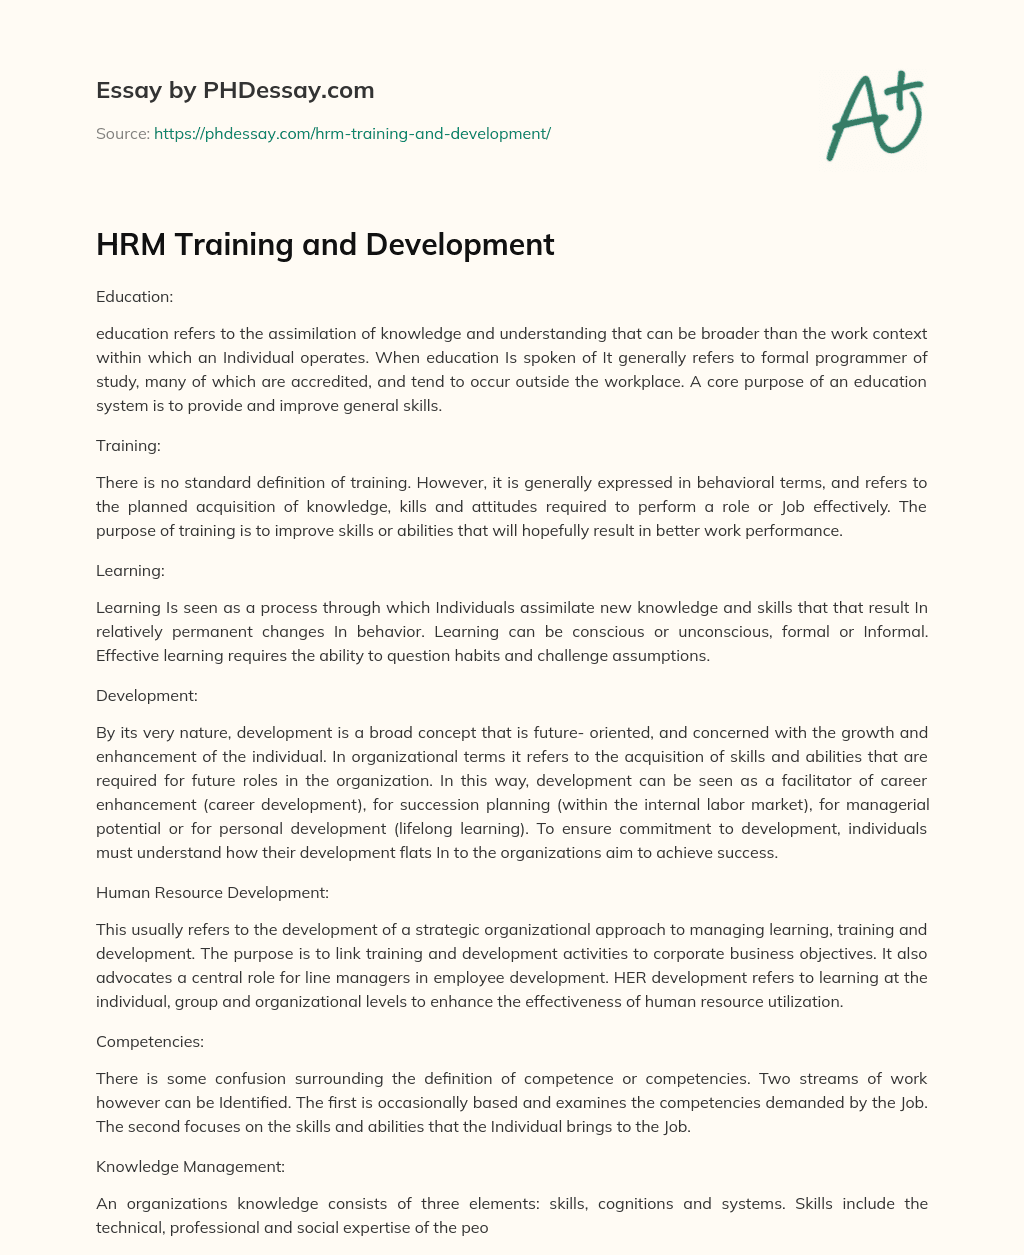 HRM Training and Development essay